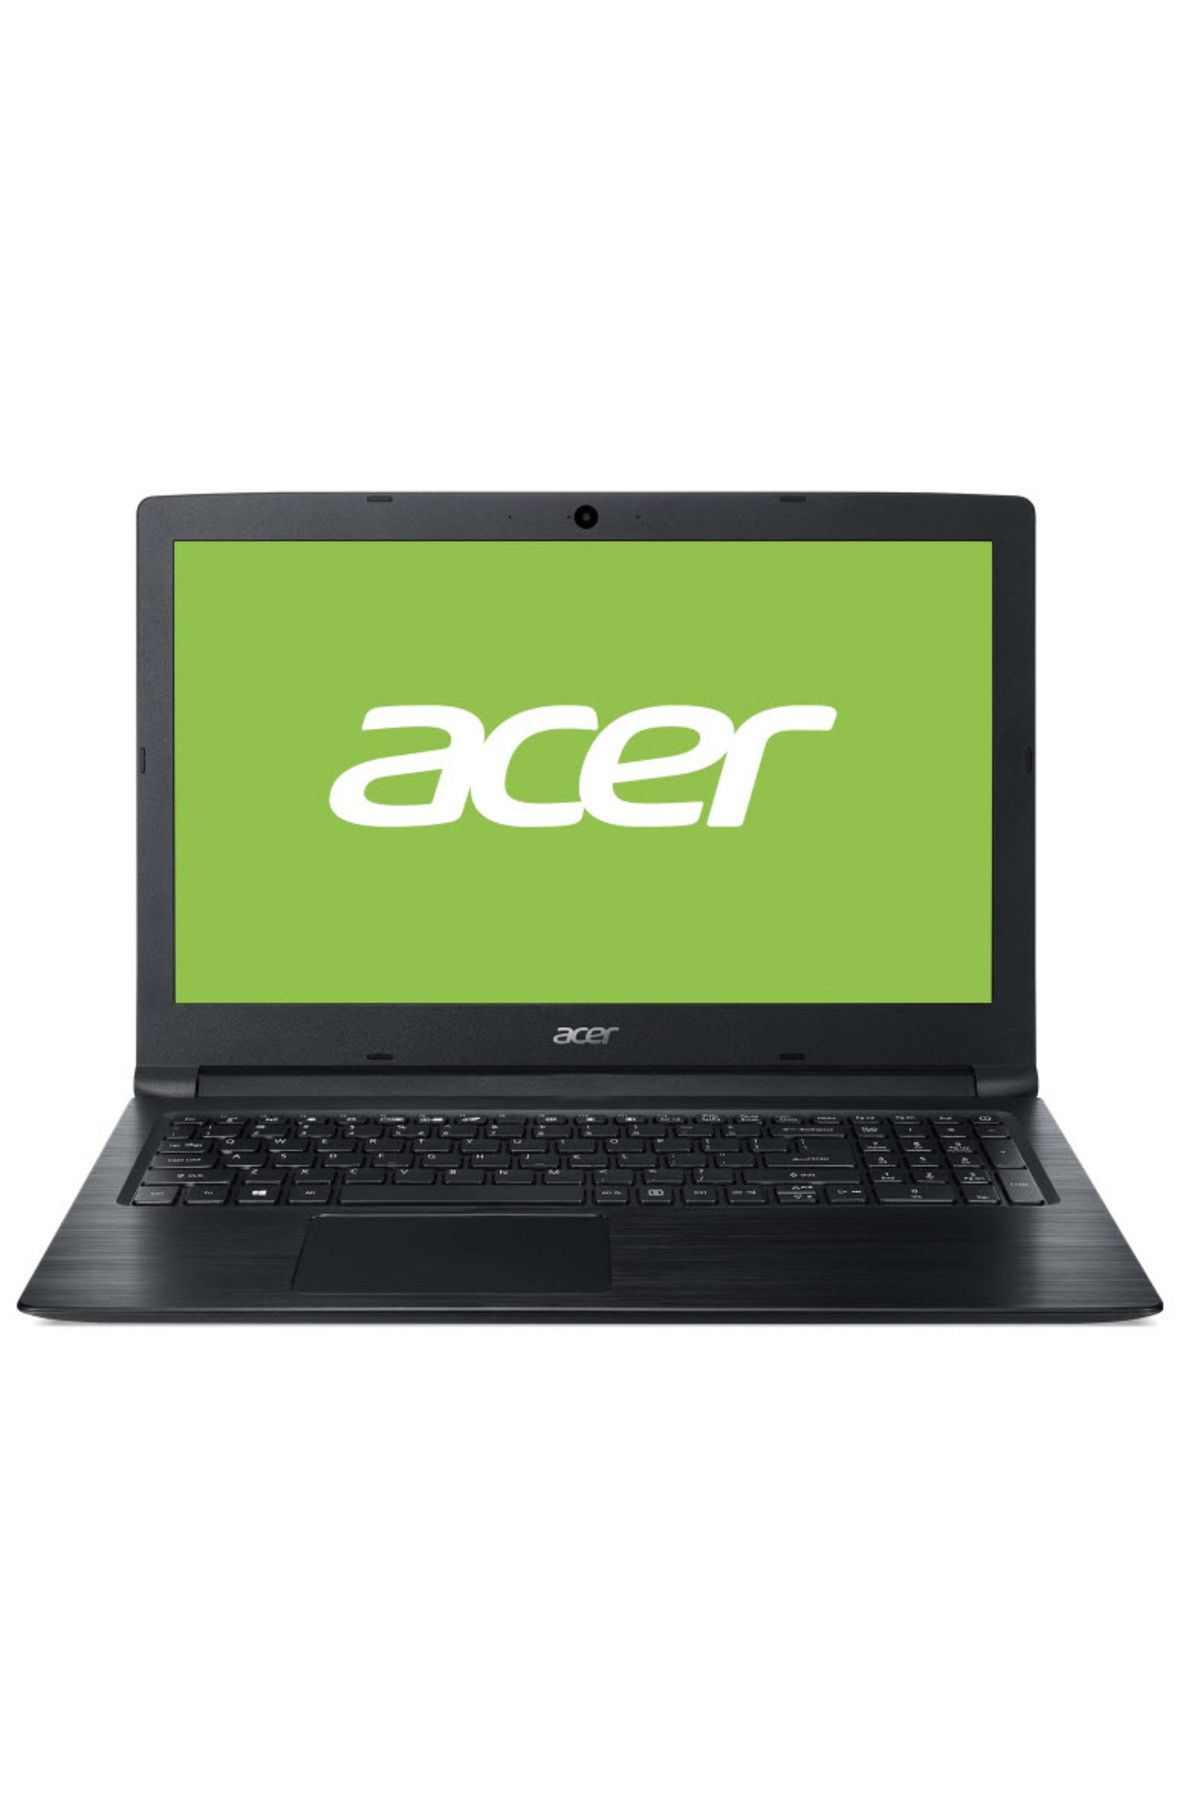 ACER Aspire A315-53 Intel Core i3 7020U 4GB 500GB Linux 15.6" Taşınabilir Bilgisayar NX.H2BEY.005